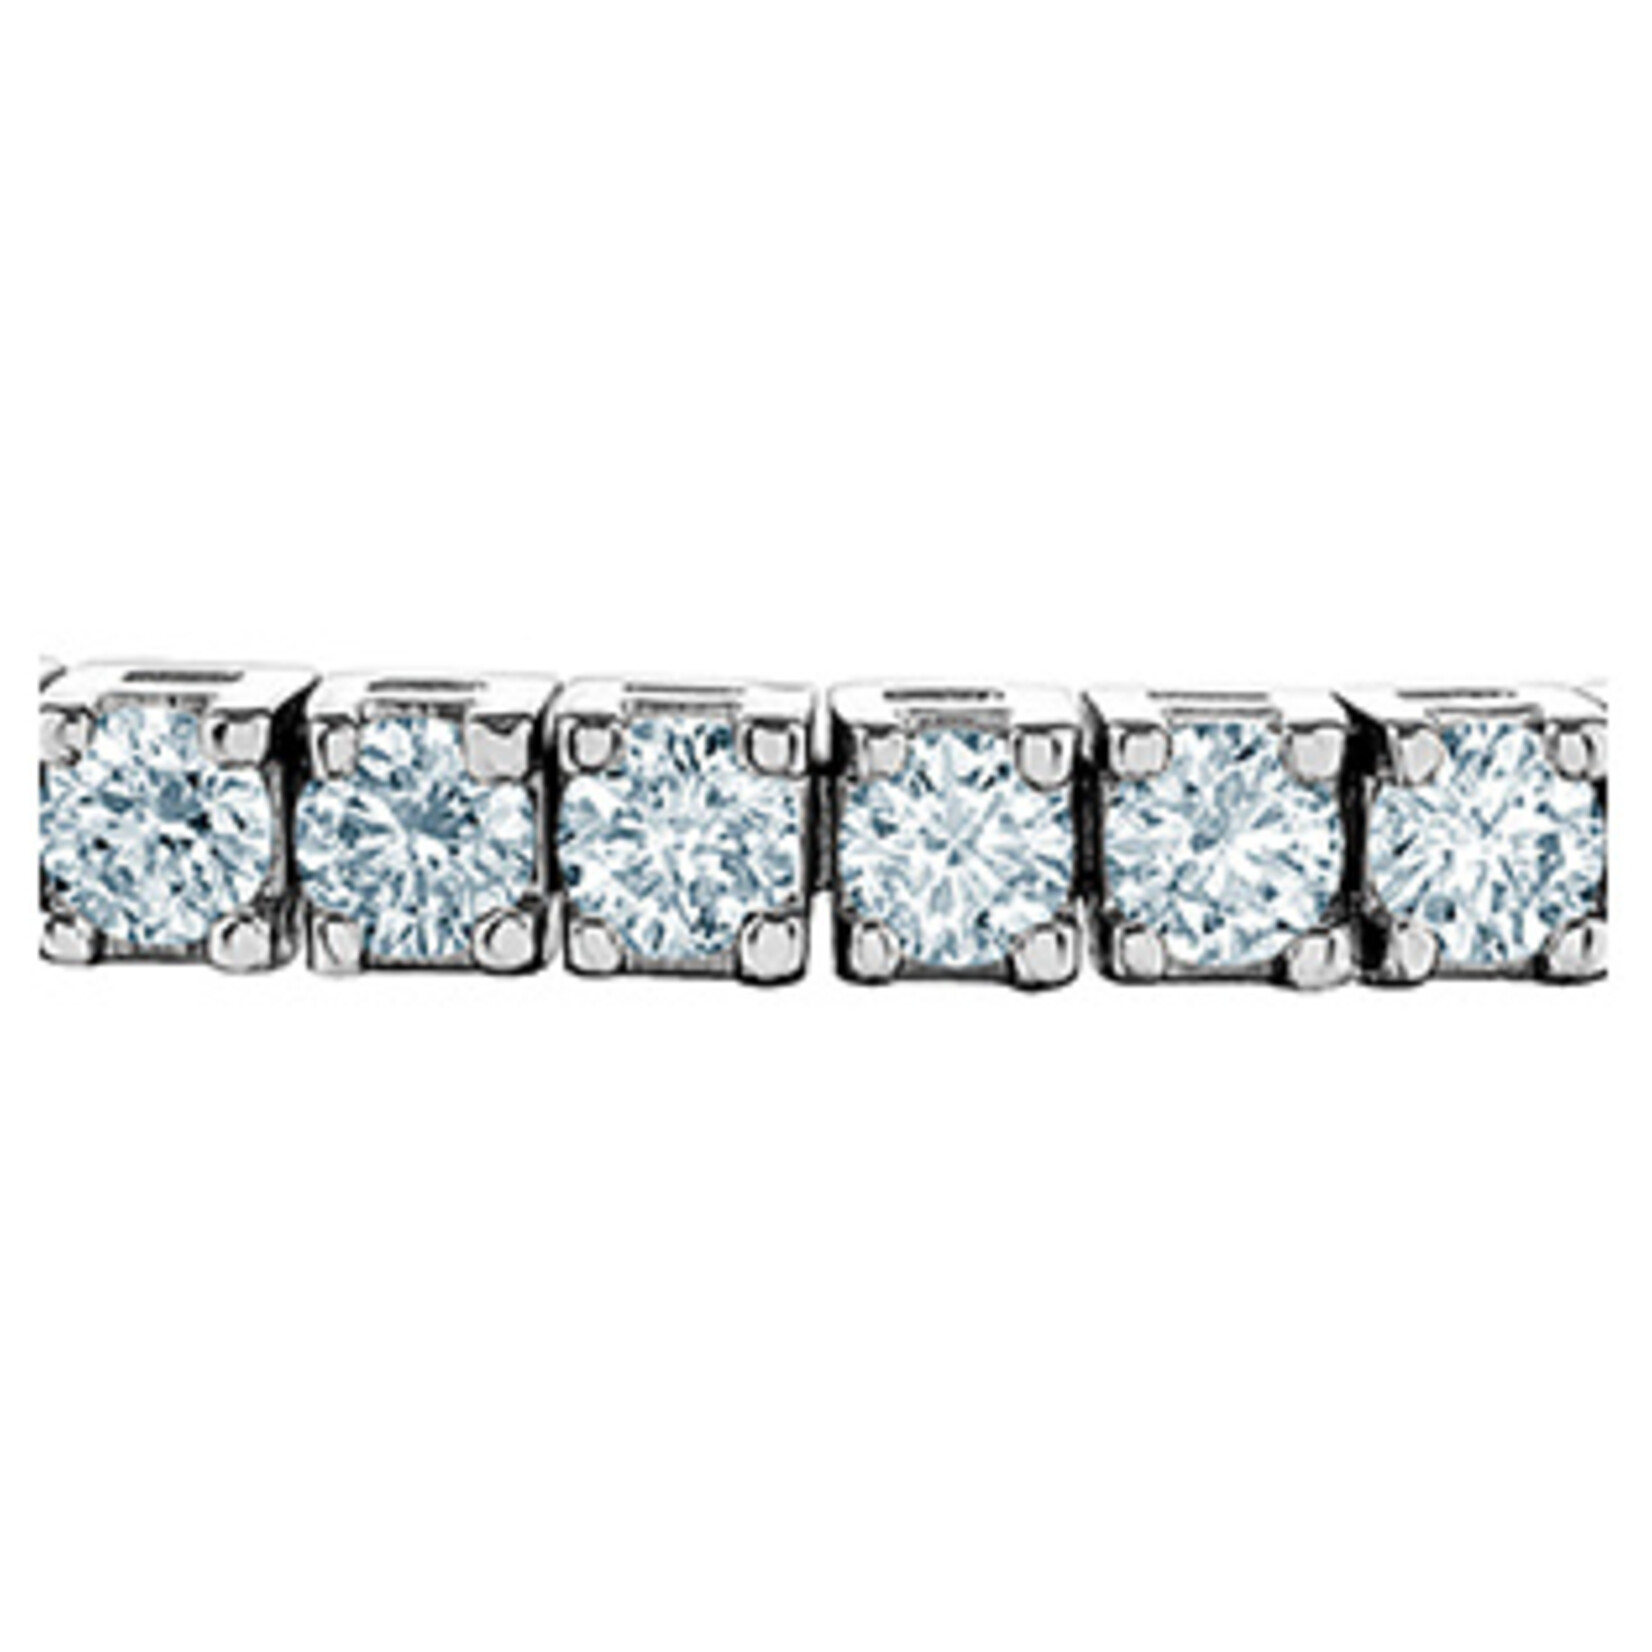 Maple Leaf Diamonds PL 950 Ru 69 Diamond Bracelet